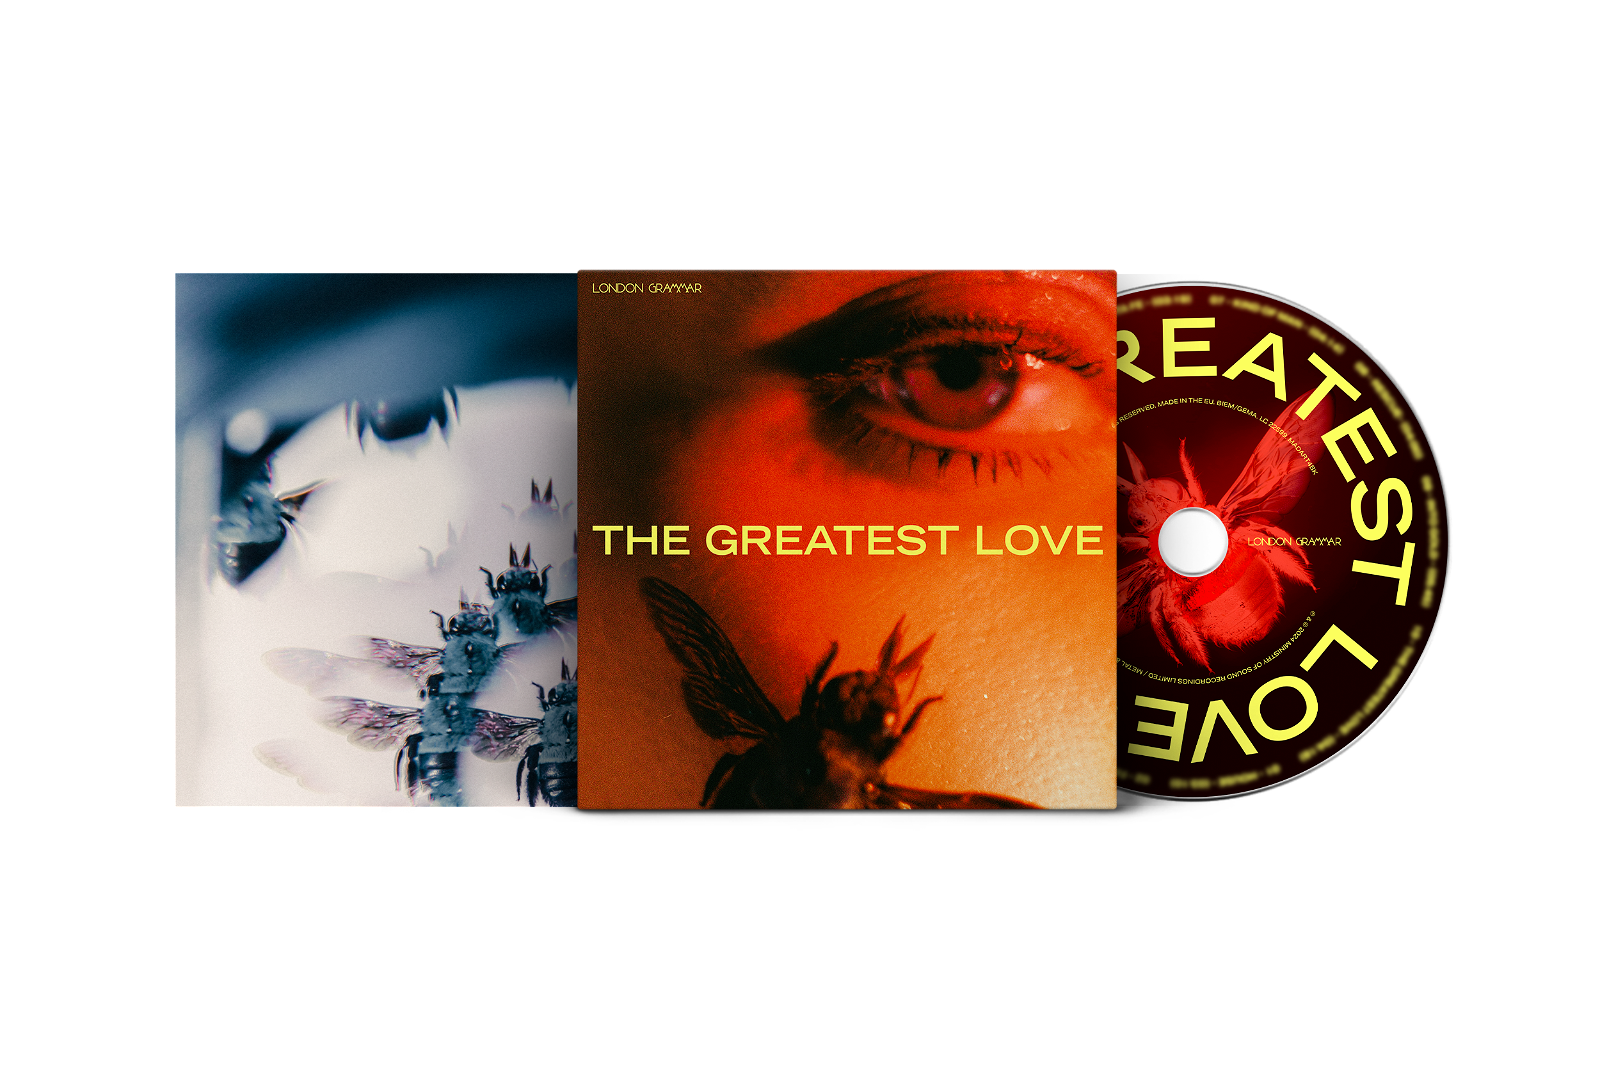 CD Shop - LONDON GRAMMAR THE GREATEST LOVE